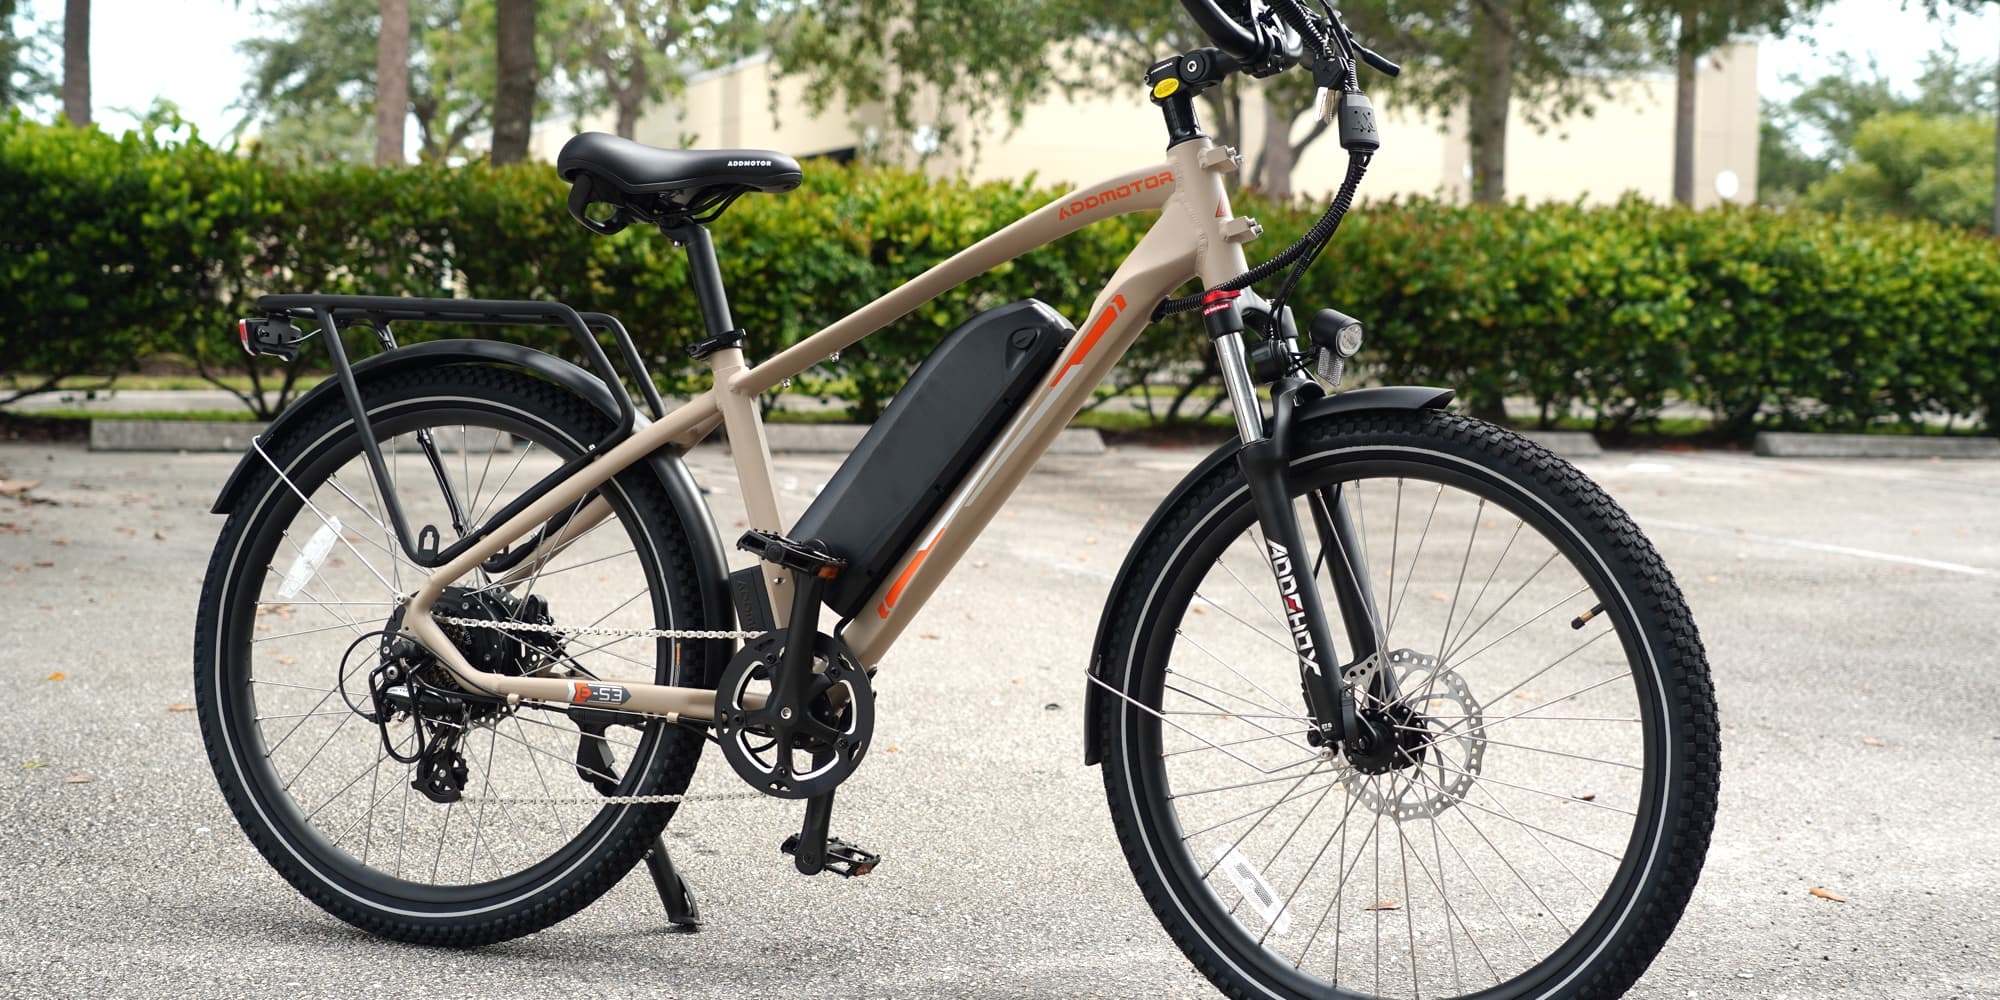 Addmotor E-53 City Pro electric bike review: 125 miles on an e-bike?!?